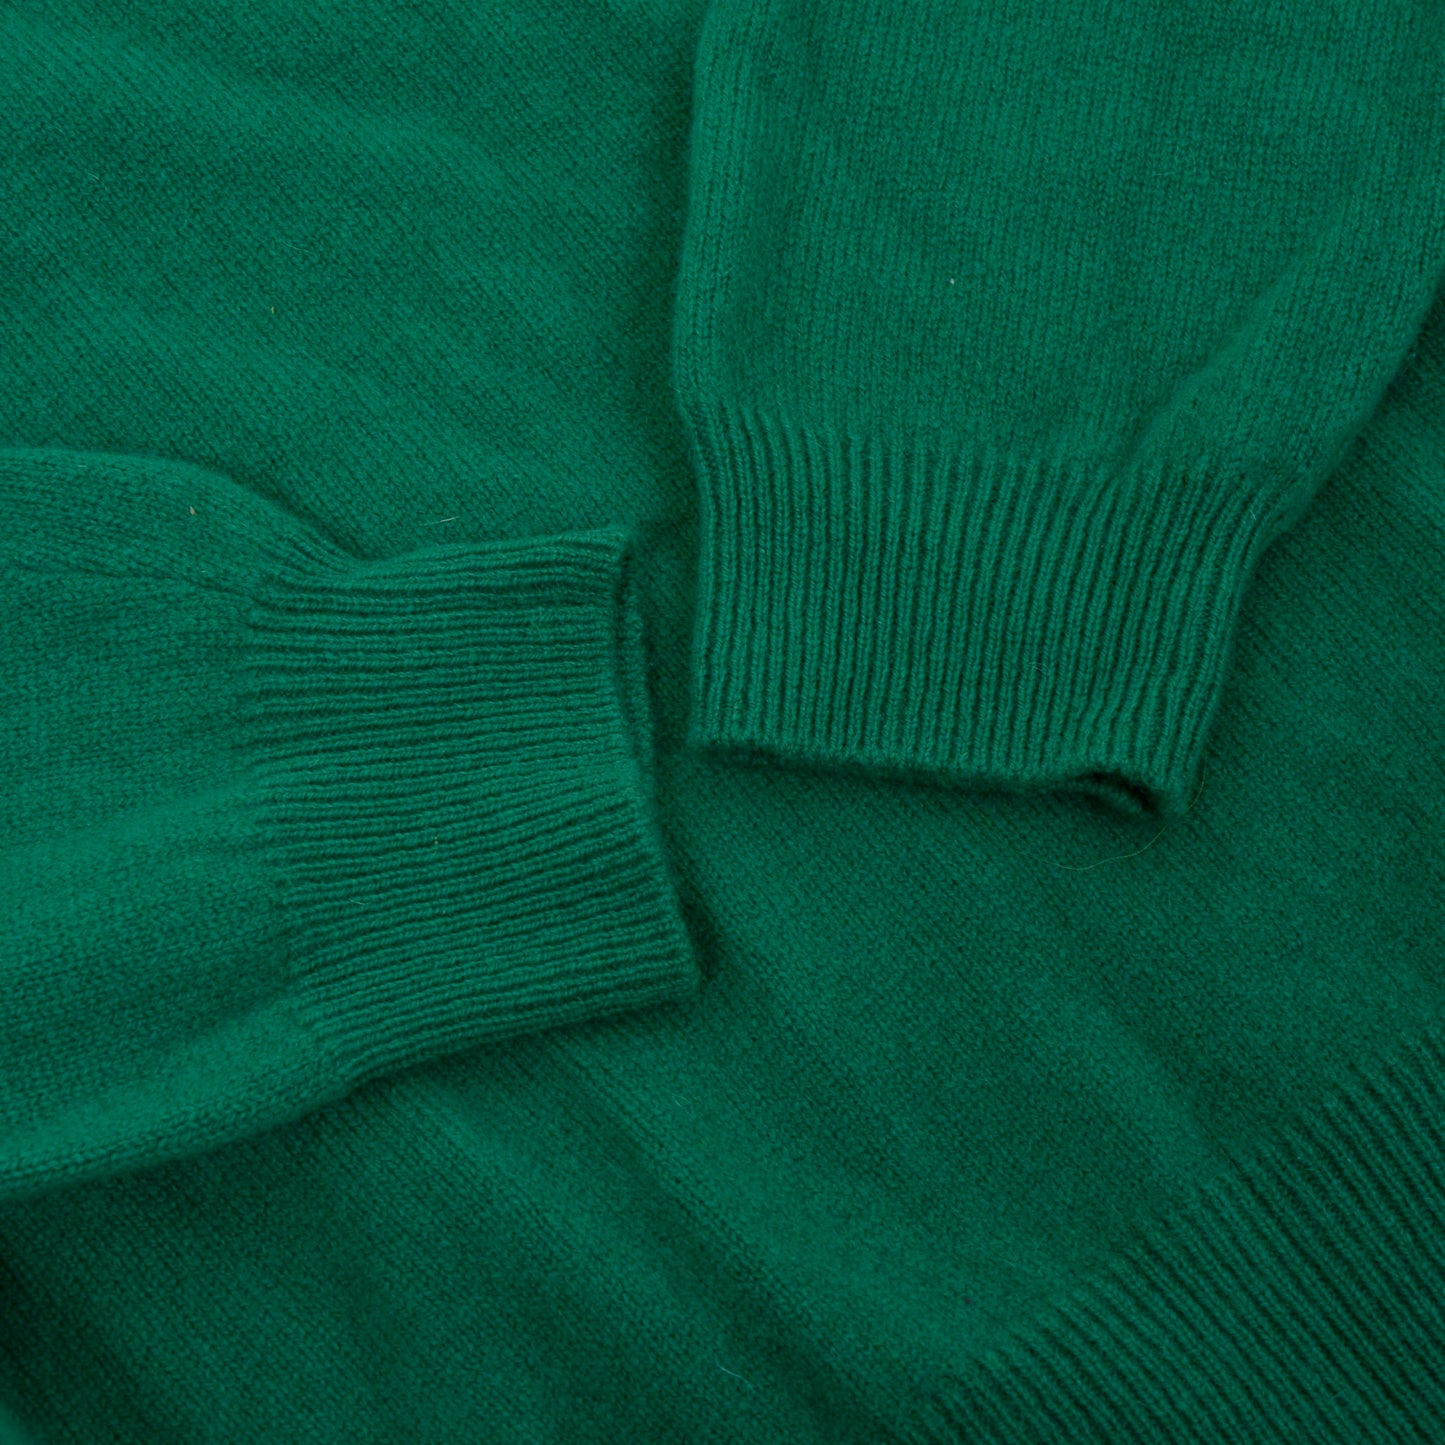 Alan Paine England V-Neck Sweater Size UK 46"/117cm EUR 54 - Green